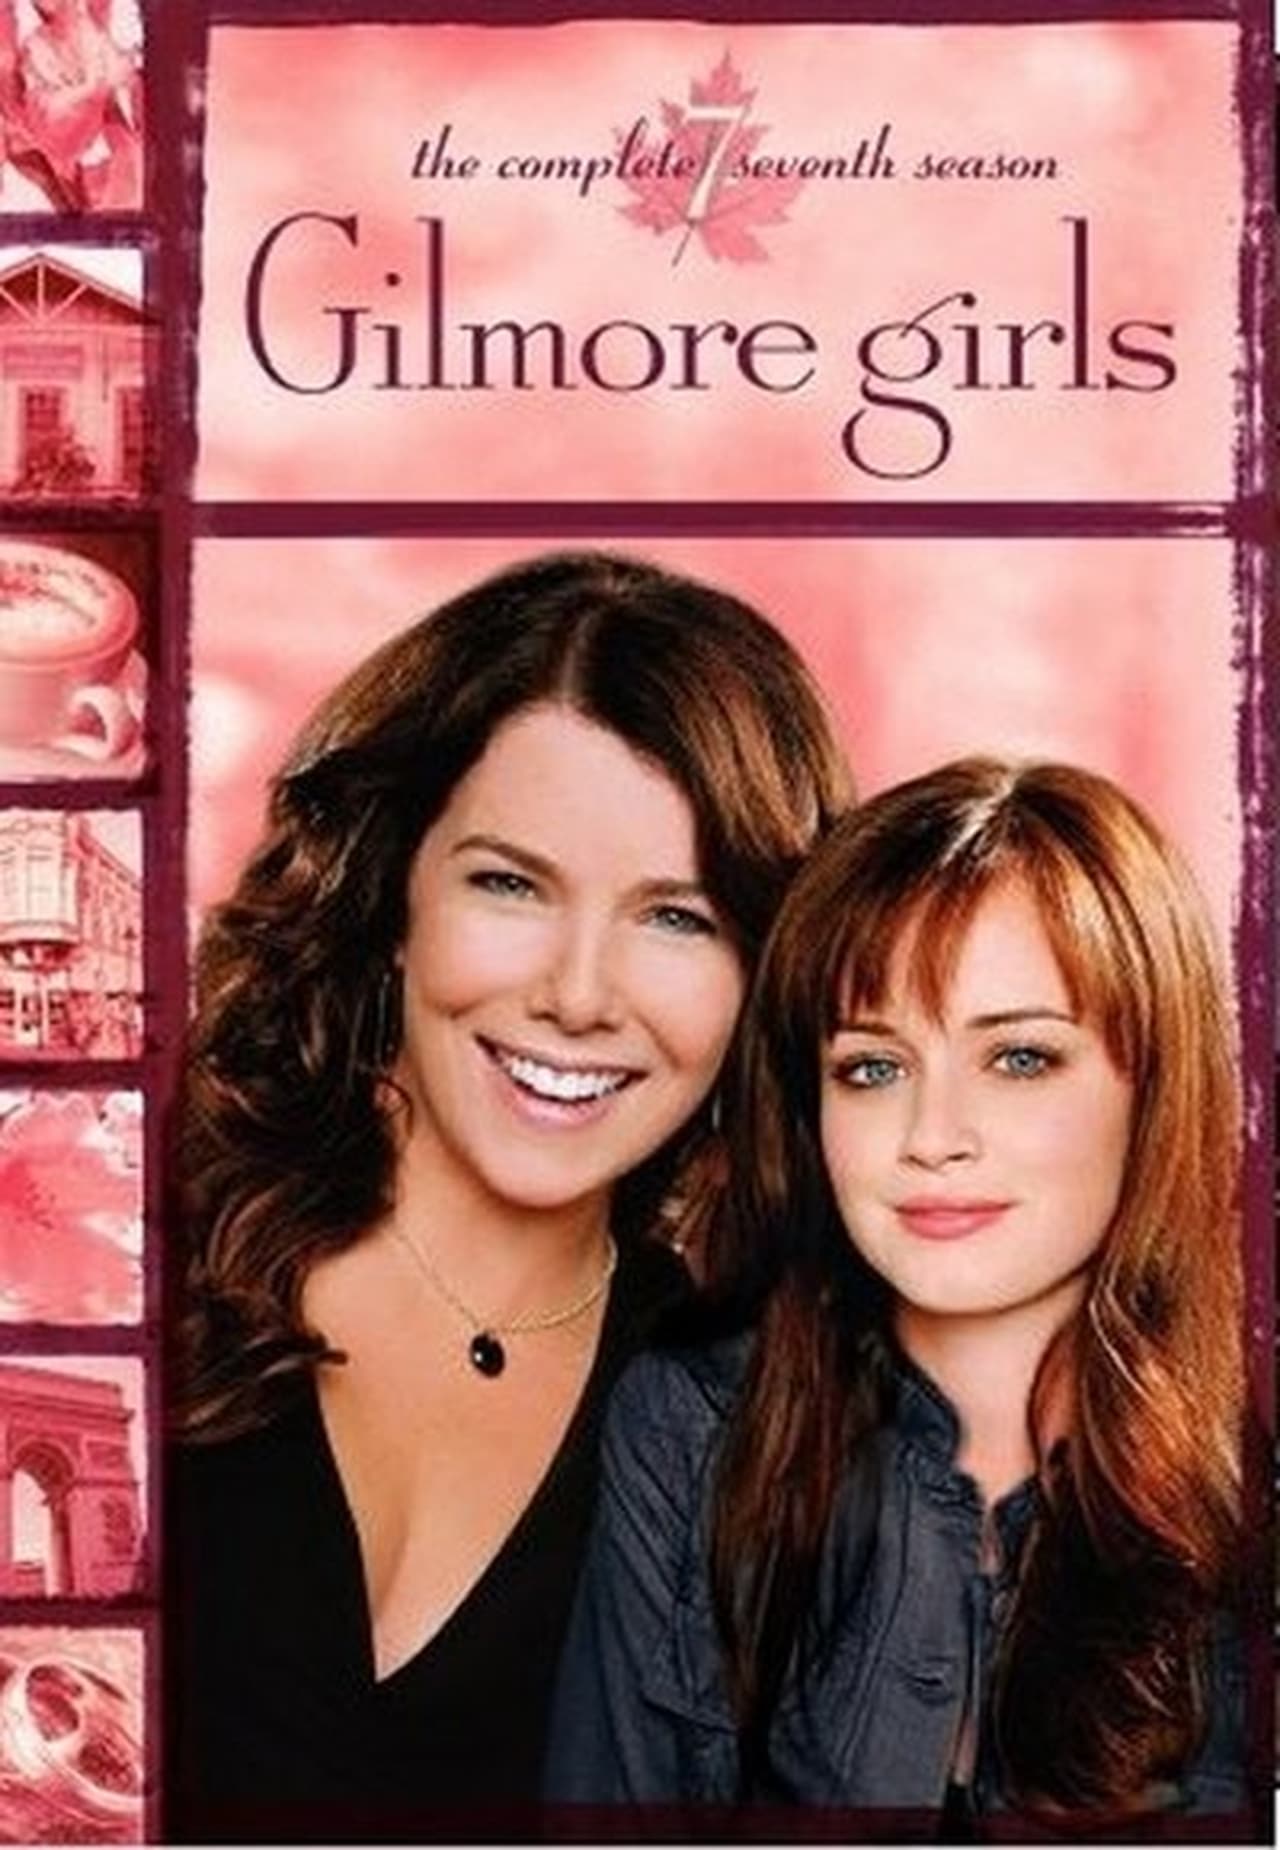 Image Las chicas Gilmore